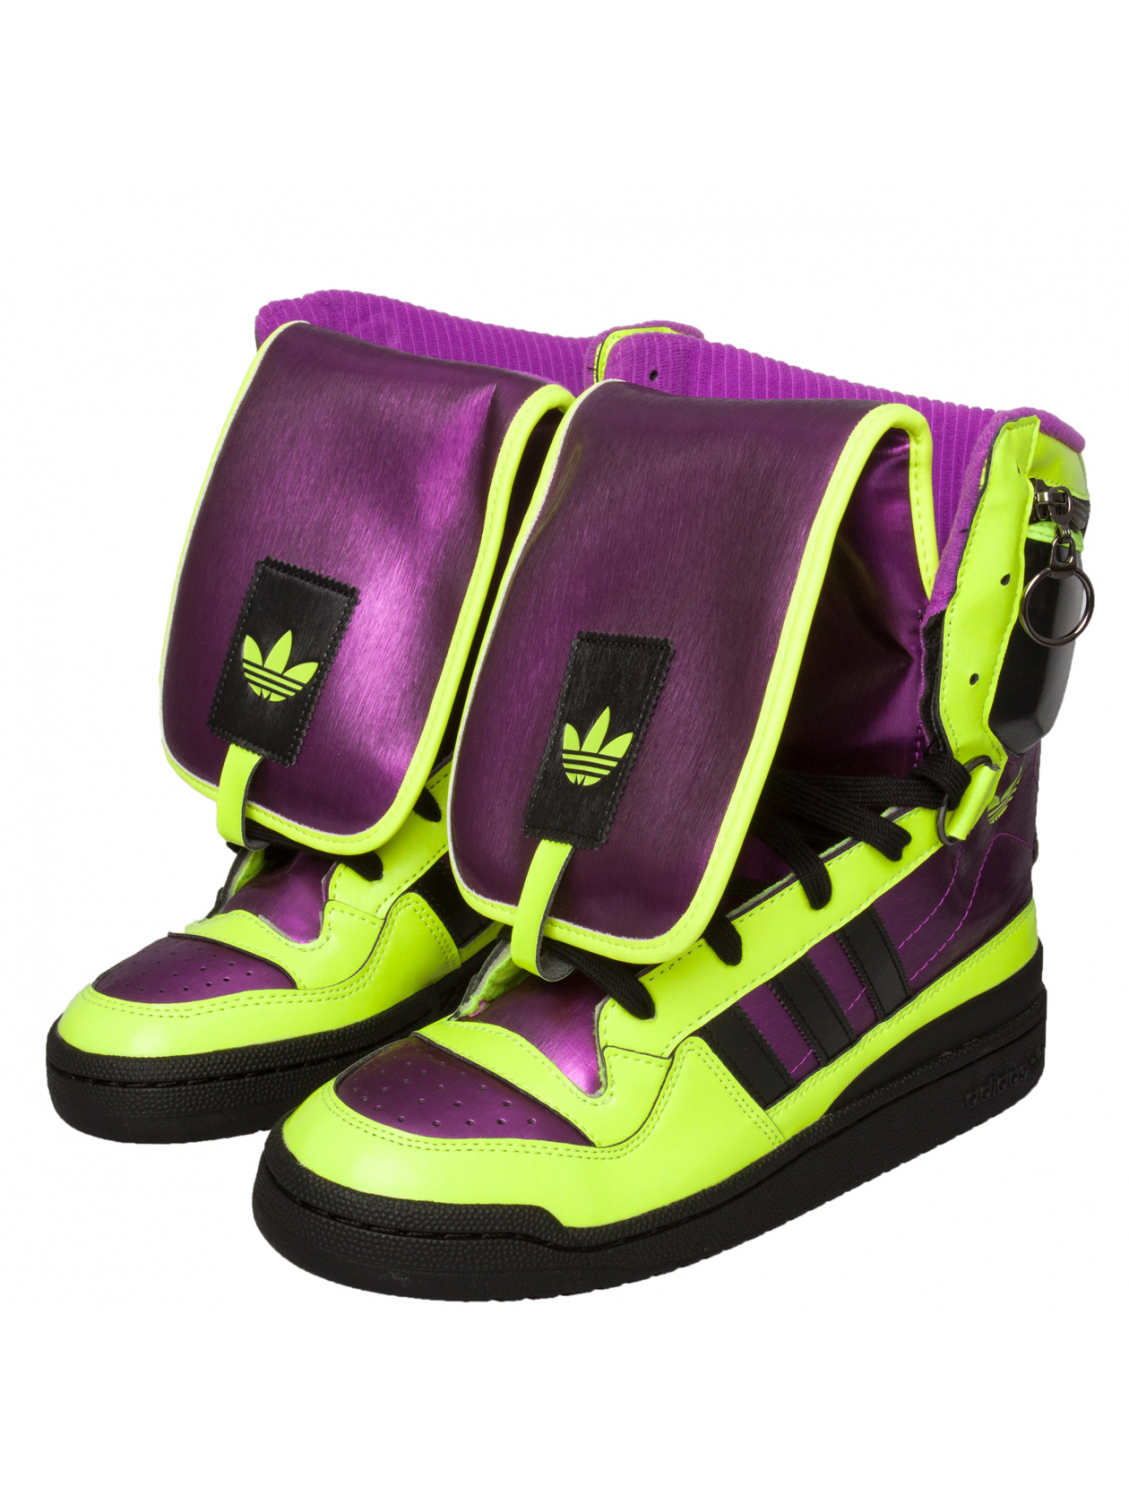 Jeremy Scott For Adidas Tall Boy Summer Sneaker Multi in Multicolor for ...